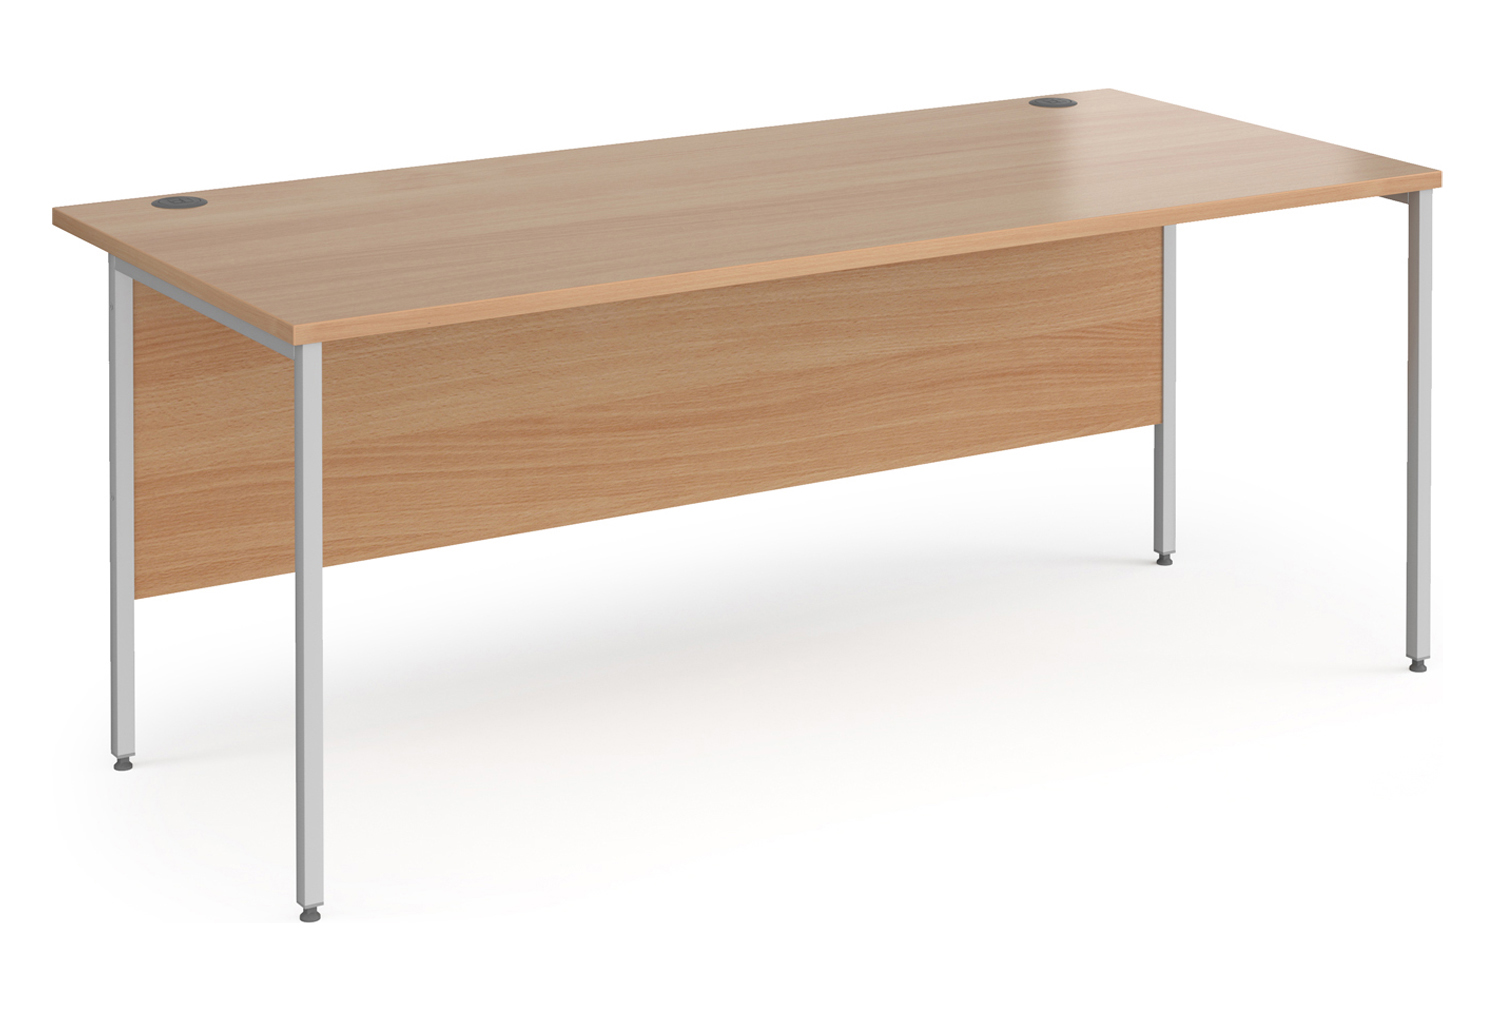 Value Line Classic+ Rectangular H-Leg Office Desk (Silver Leg), 180wx80dx73h (cm), Beech, Express Delivery